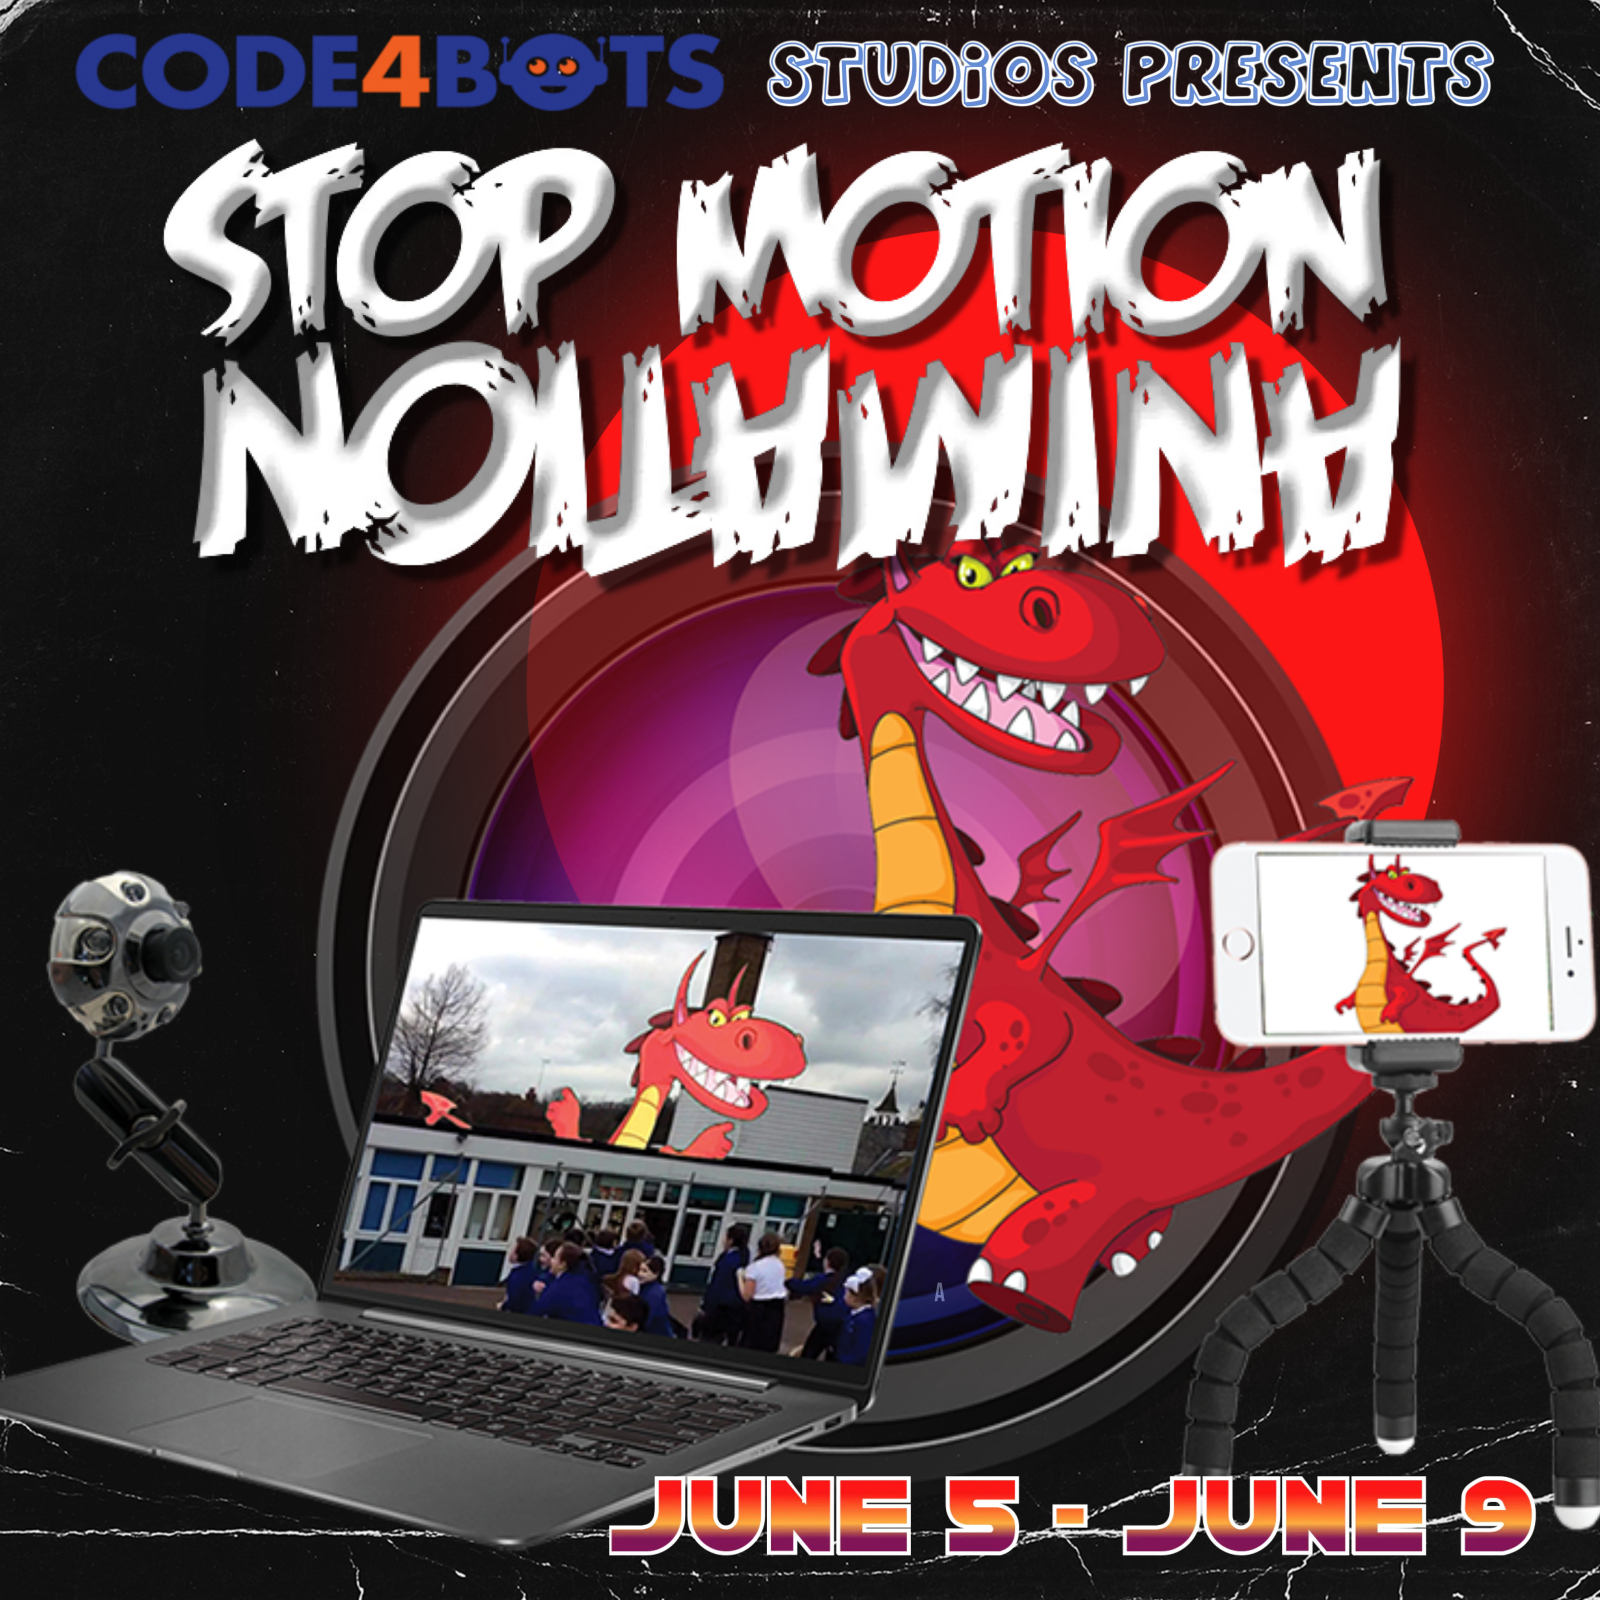 Stop motion studio  Zu3D - Create amazing movies